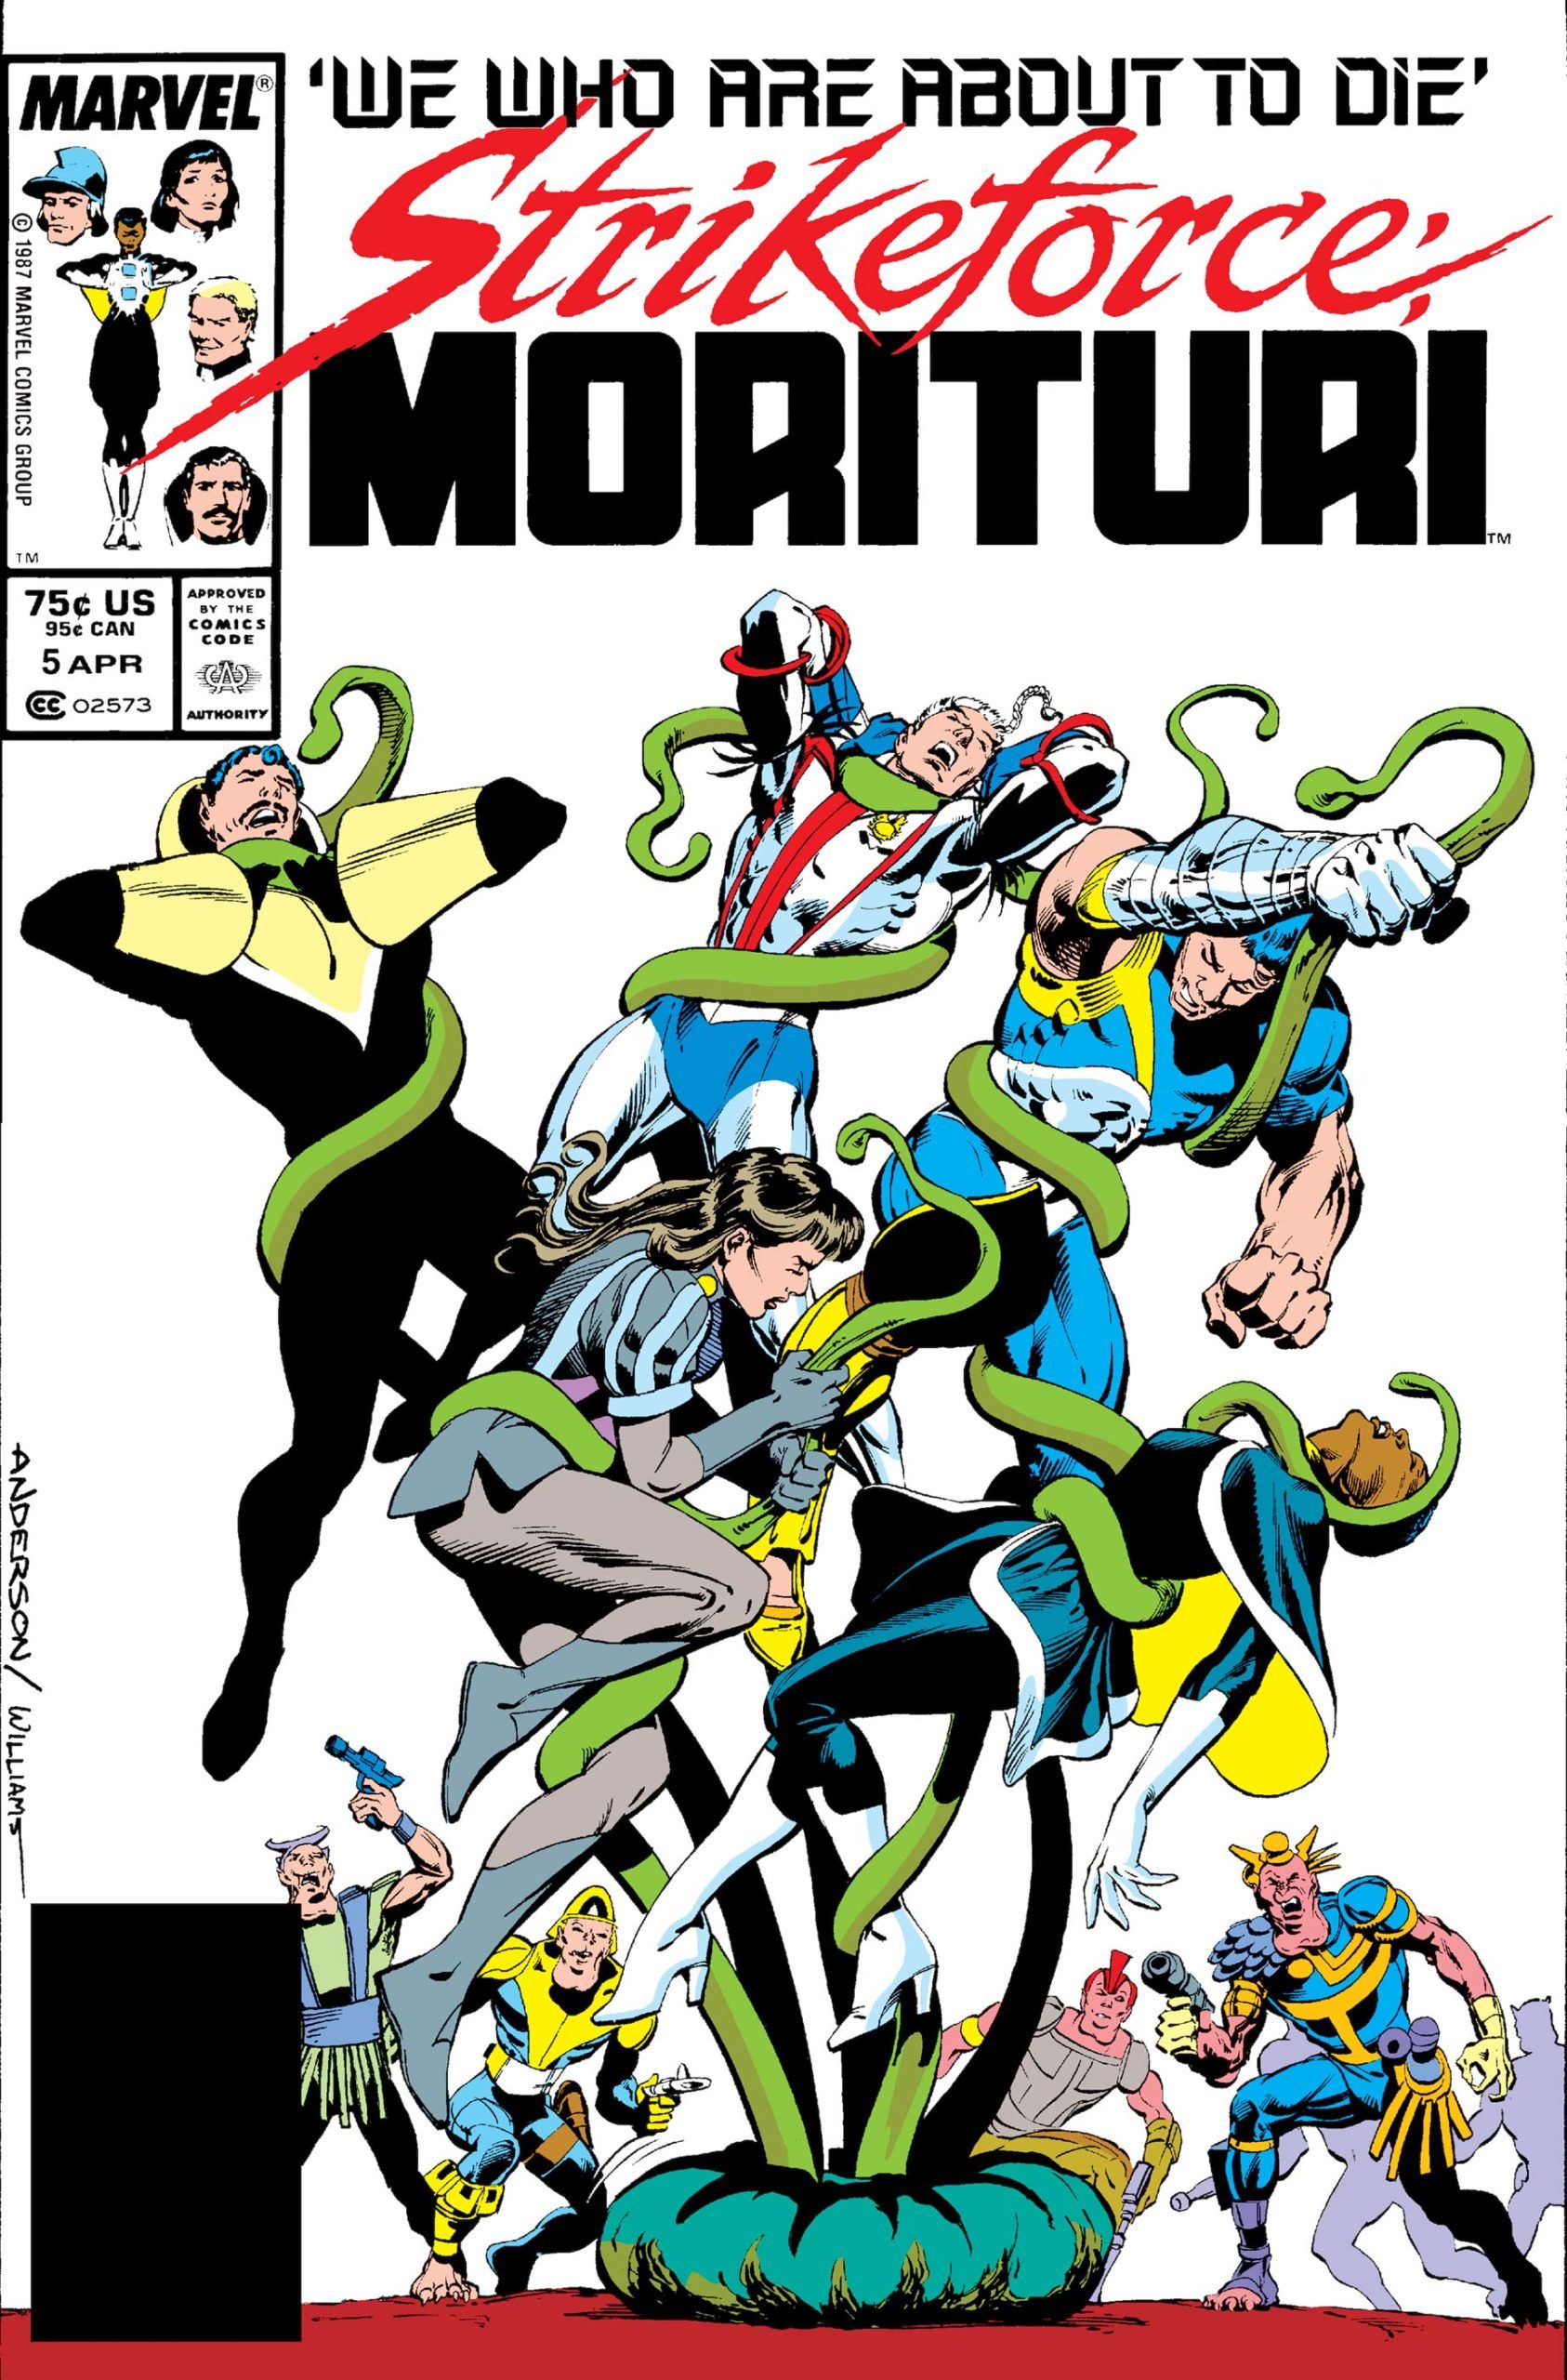 Strikeforce: Morituri #5 - Healing released by Marvel on April 1, 1987